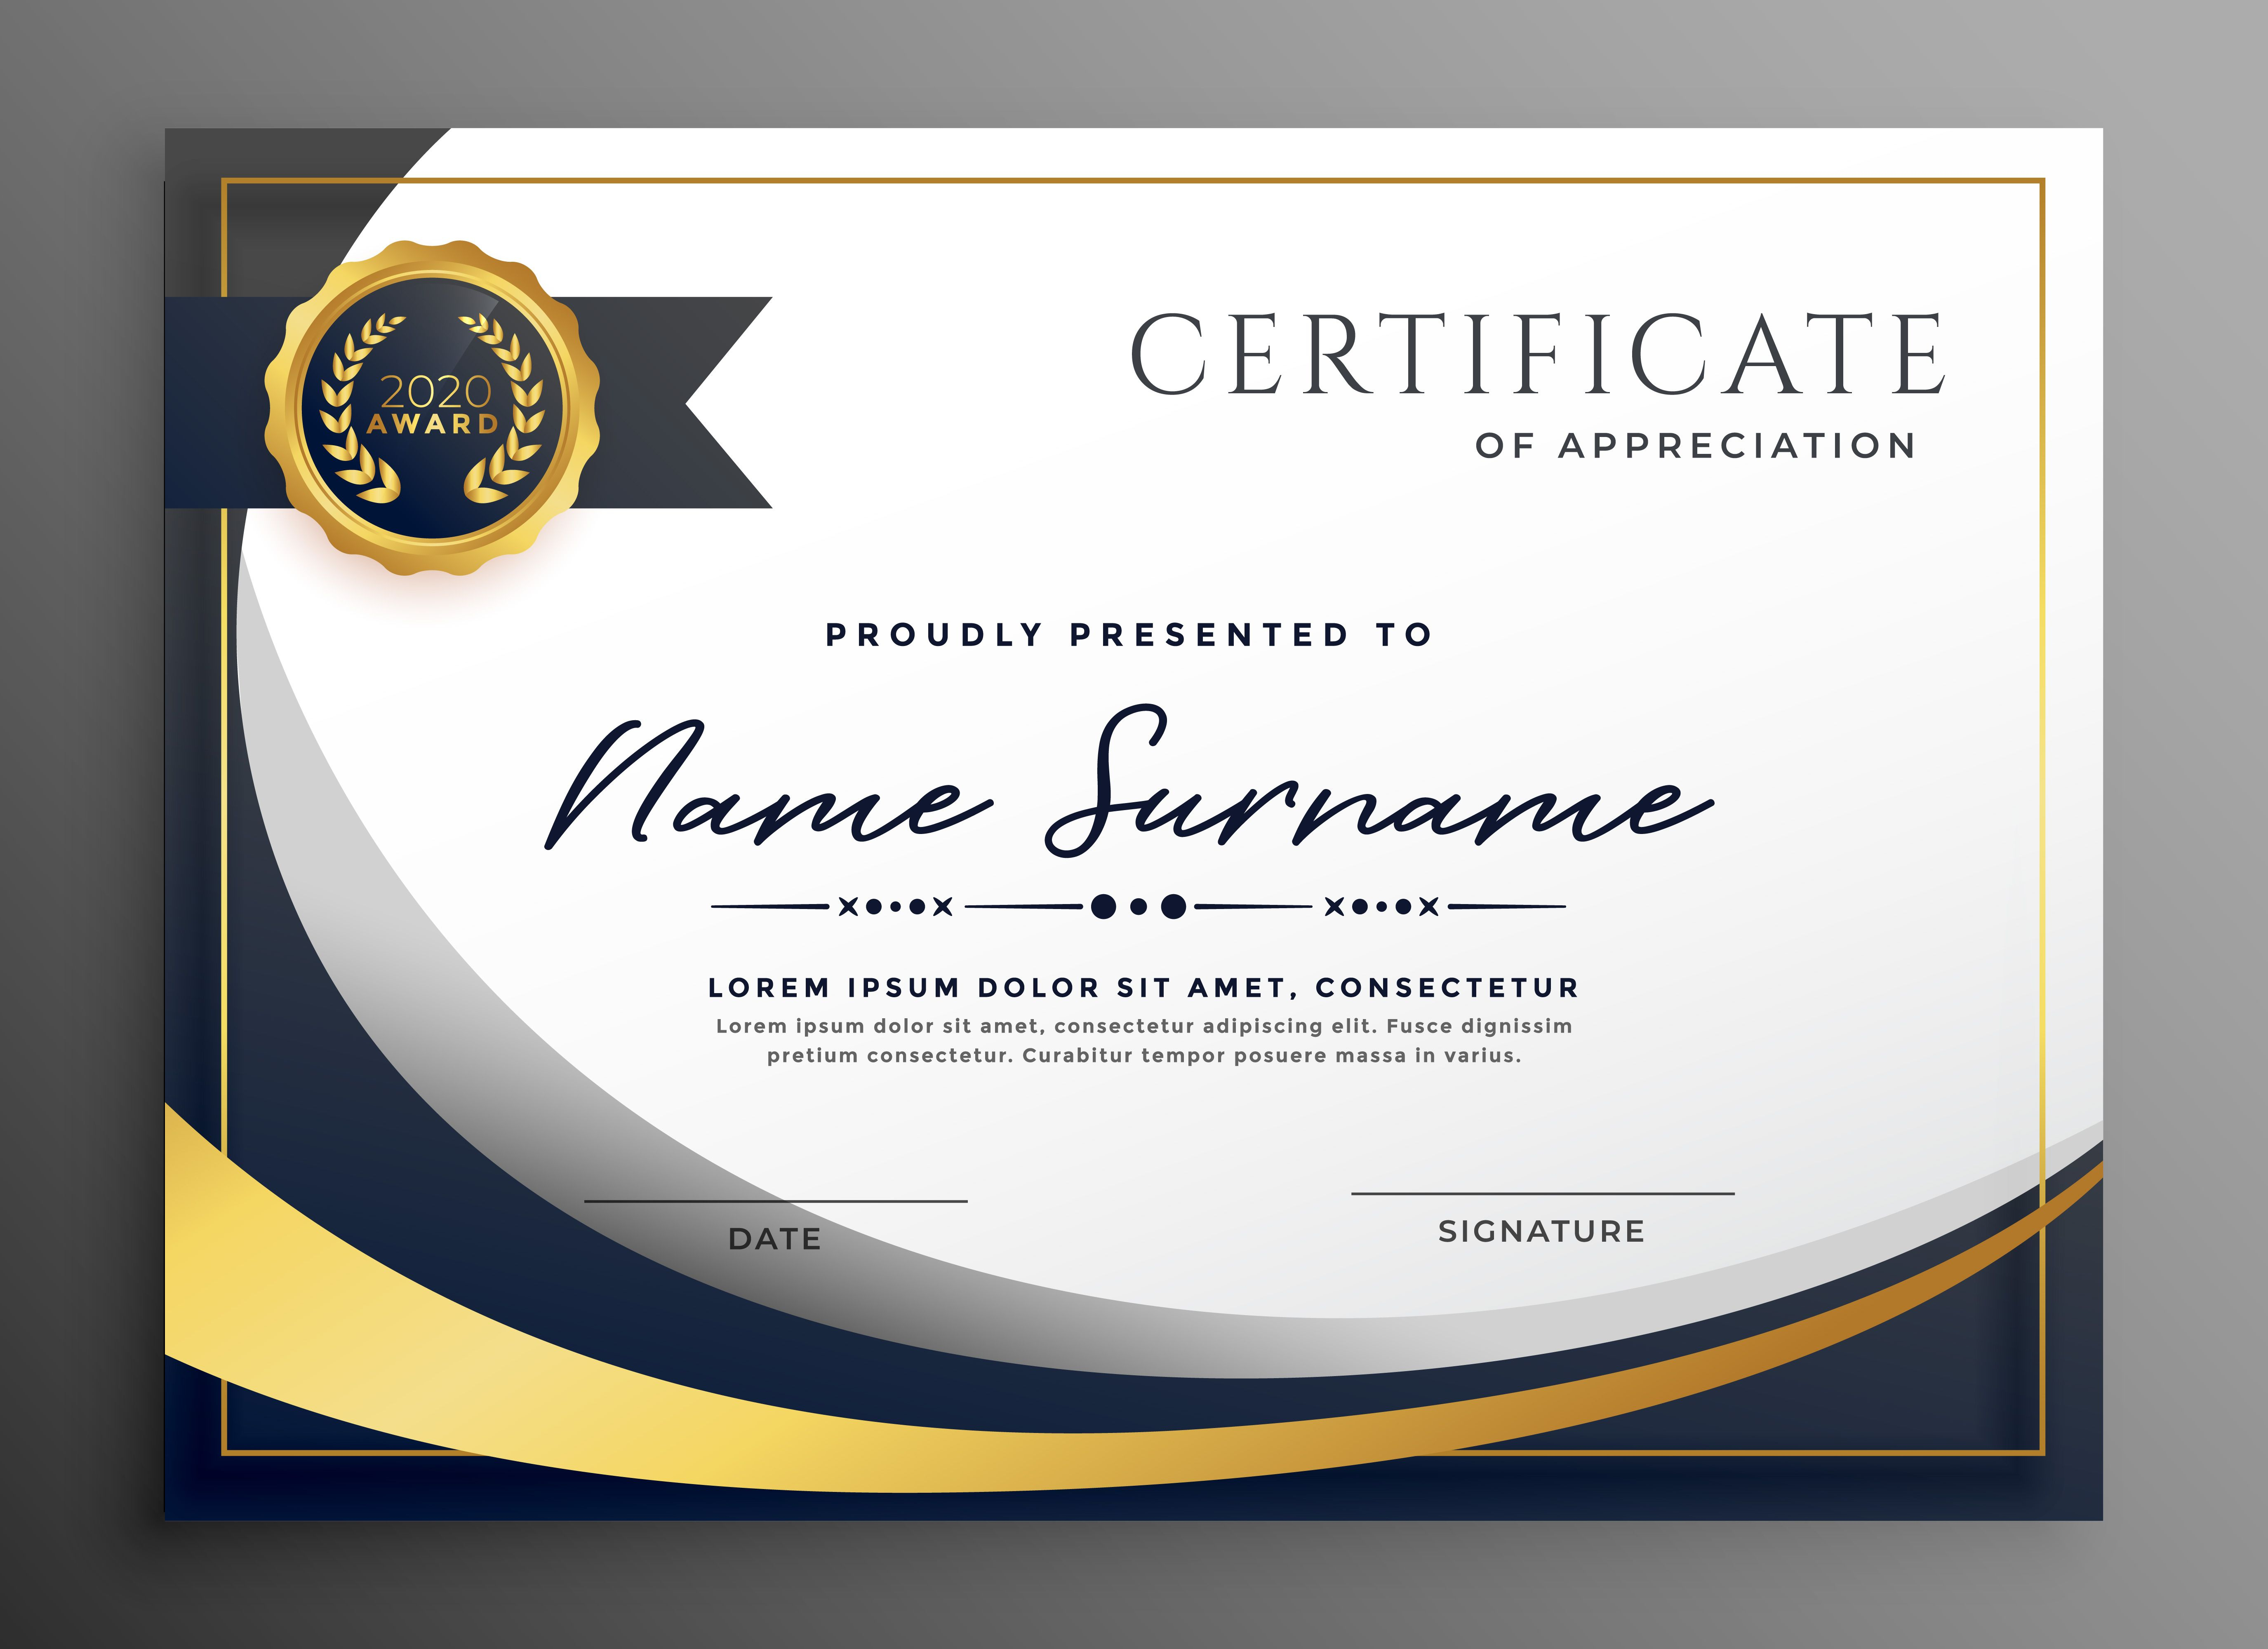 Premium Wavy Certificate Template Design | Certificate Within Award Certificate Design Template